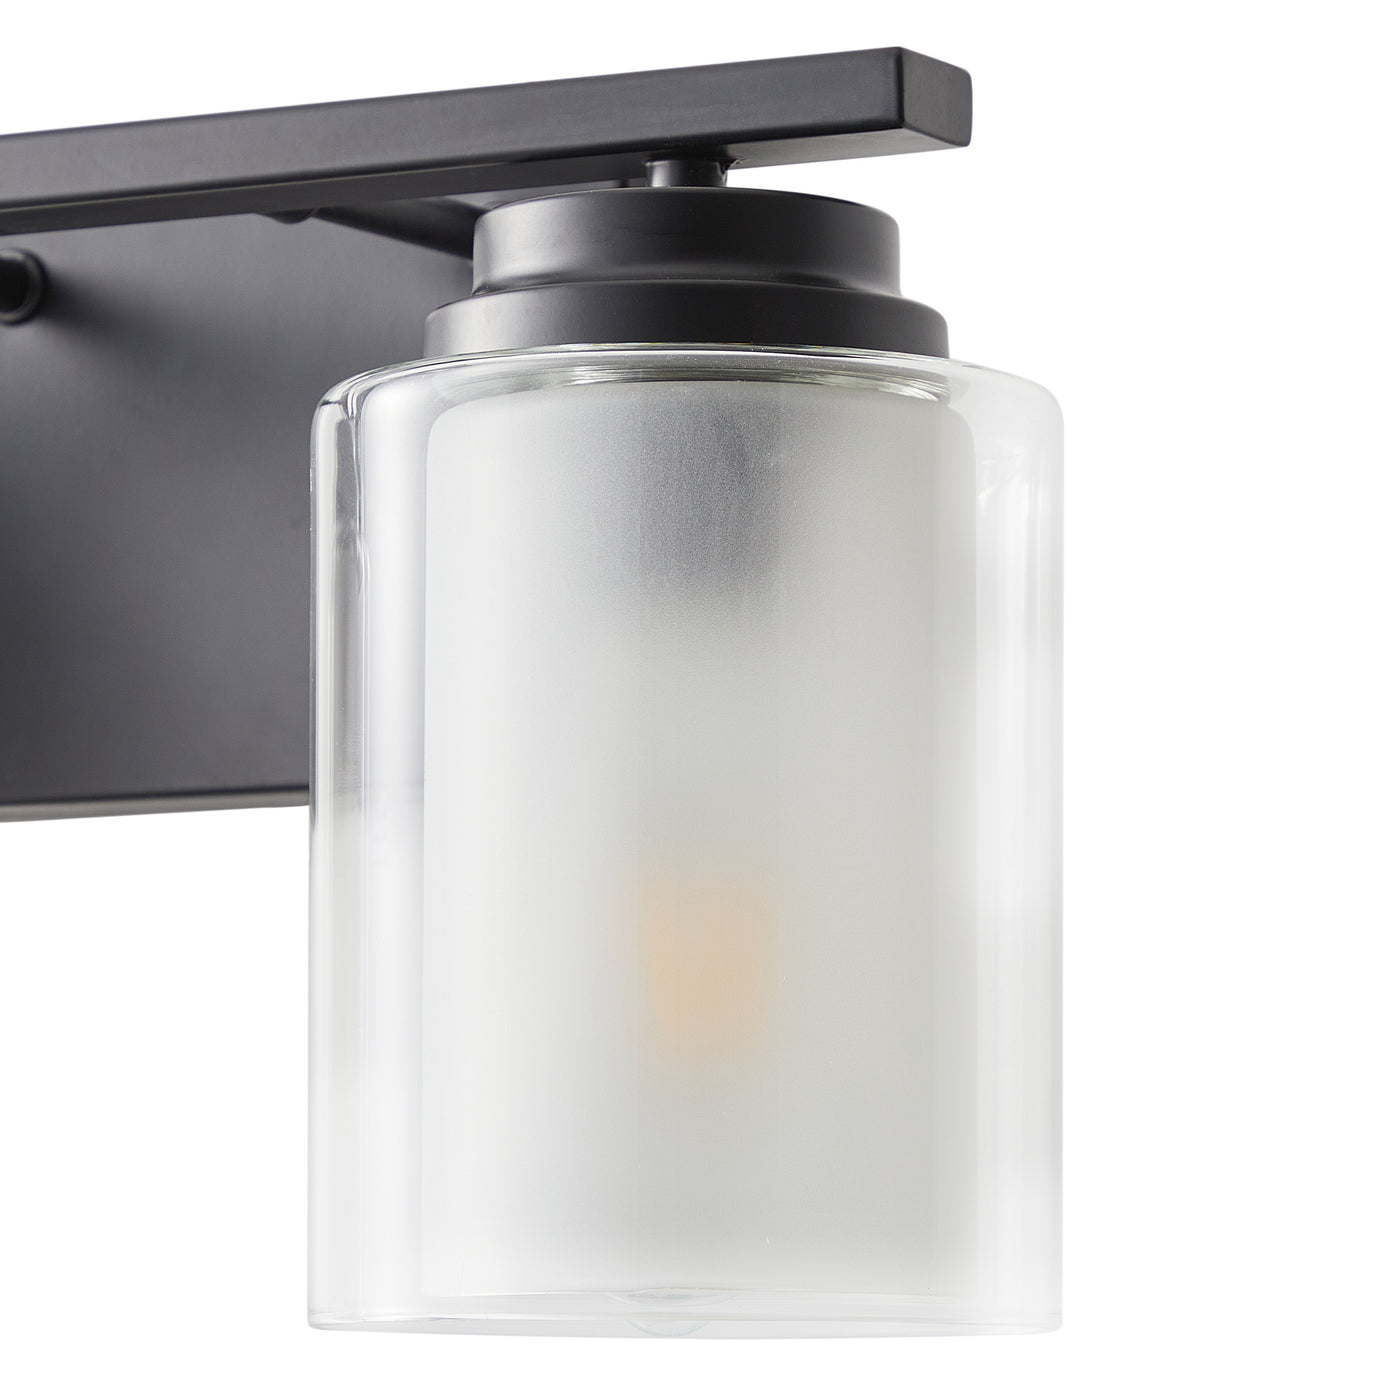 2-Lights Dual Glass Design Vanity Lighting